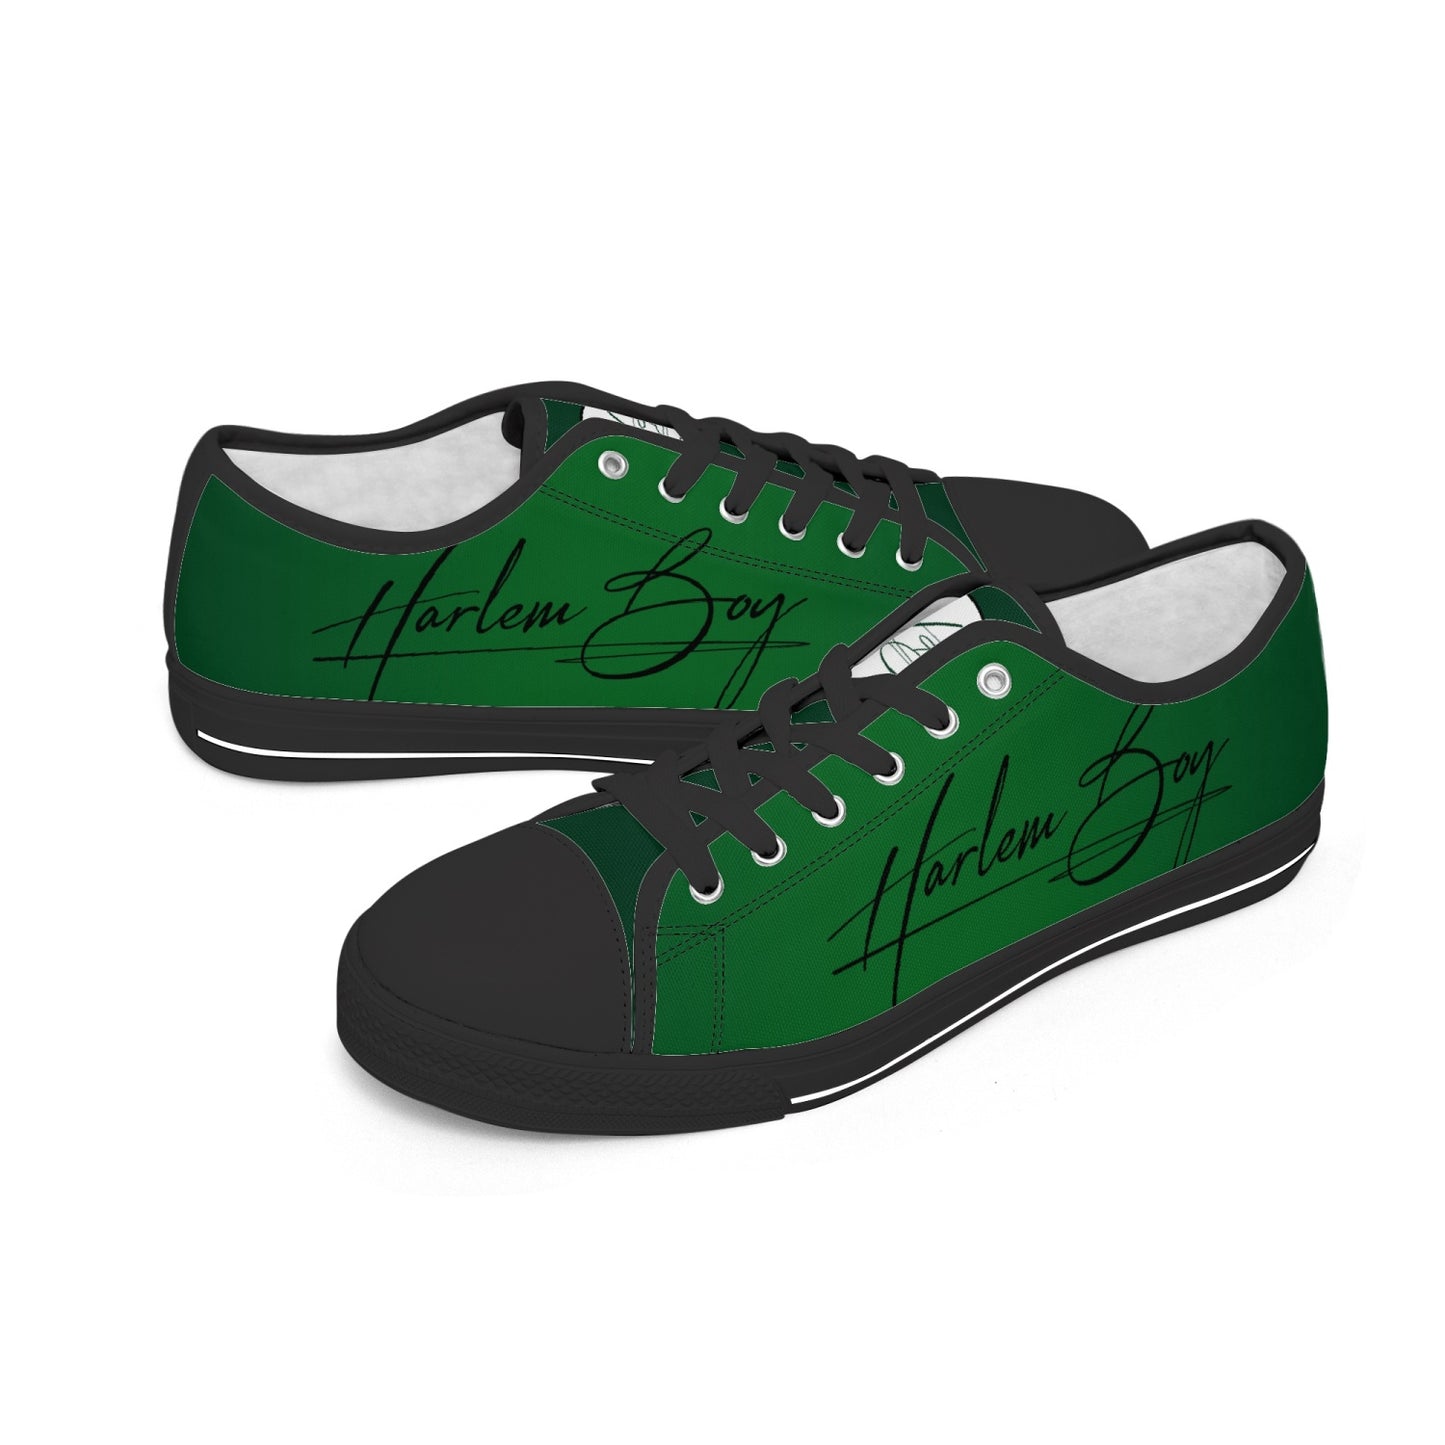 Harlem Boy "Lenox Ave" Unisex Classic Low Tops - Emerald (Black or White Sole)